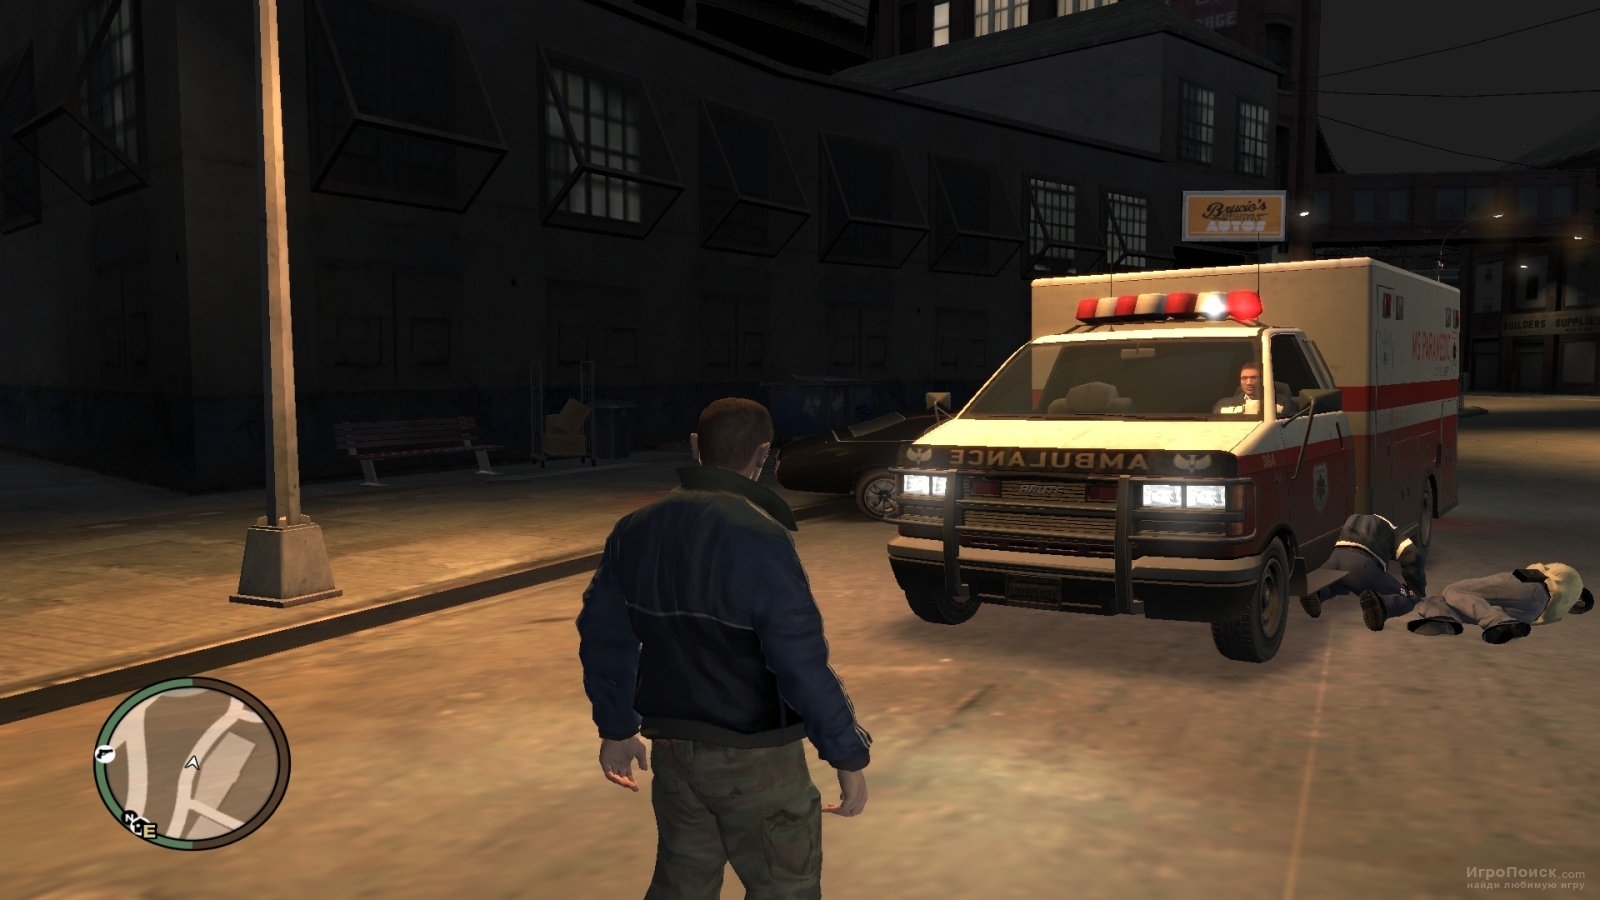 Скриншот к игре Grand Theft Auto IV